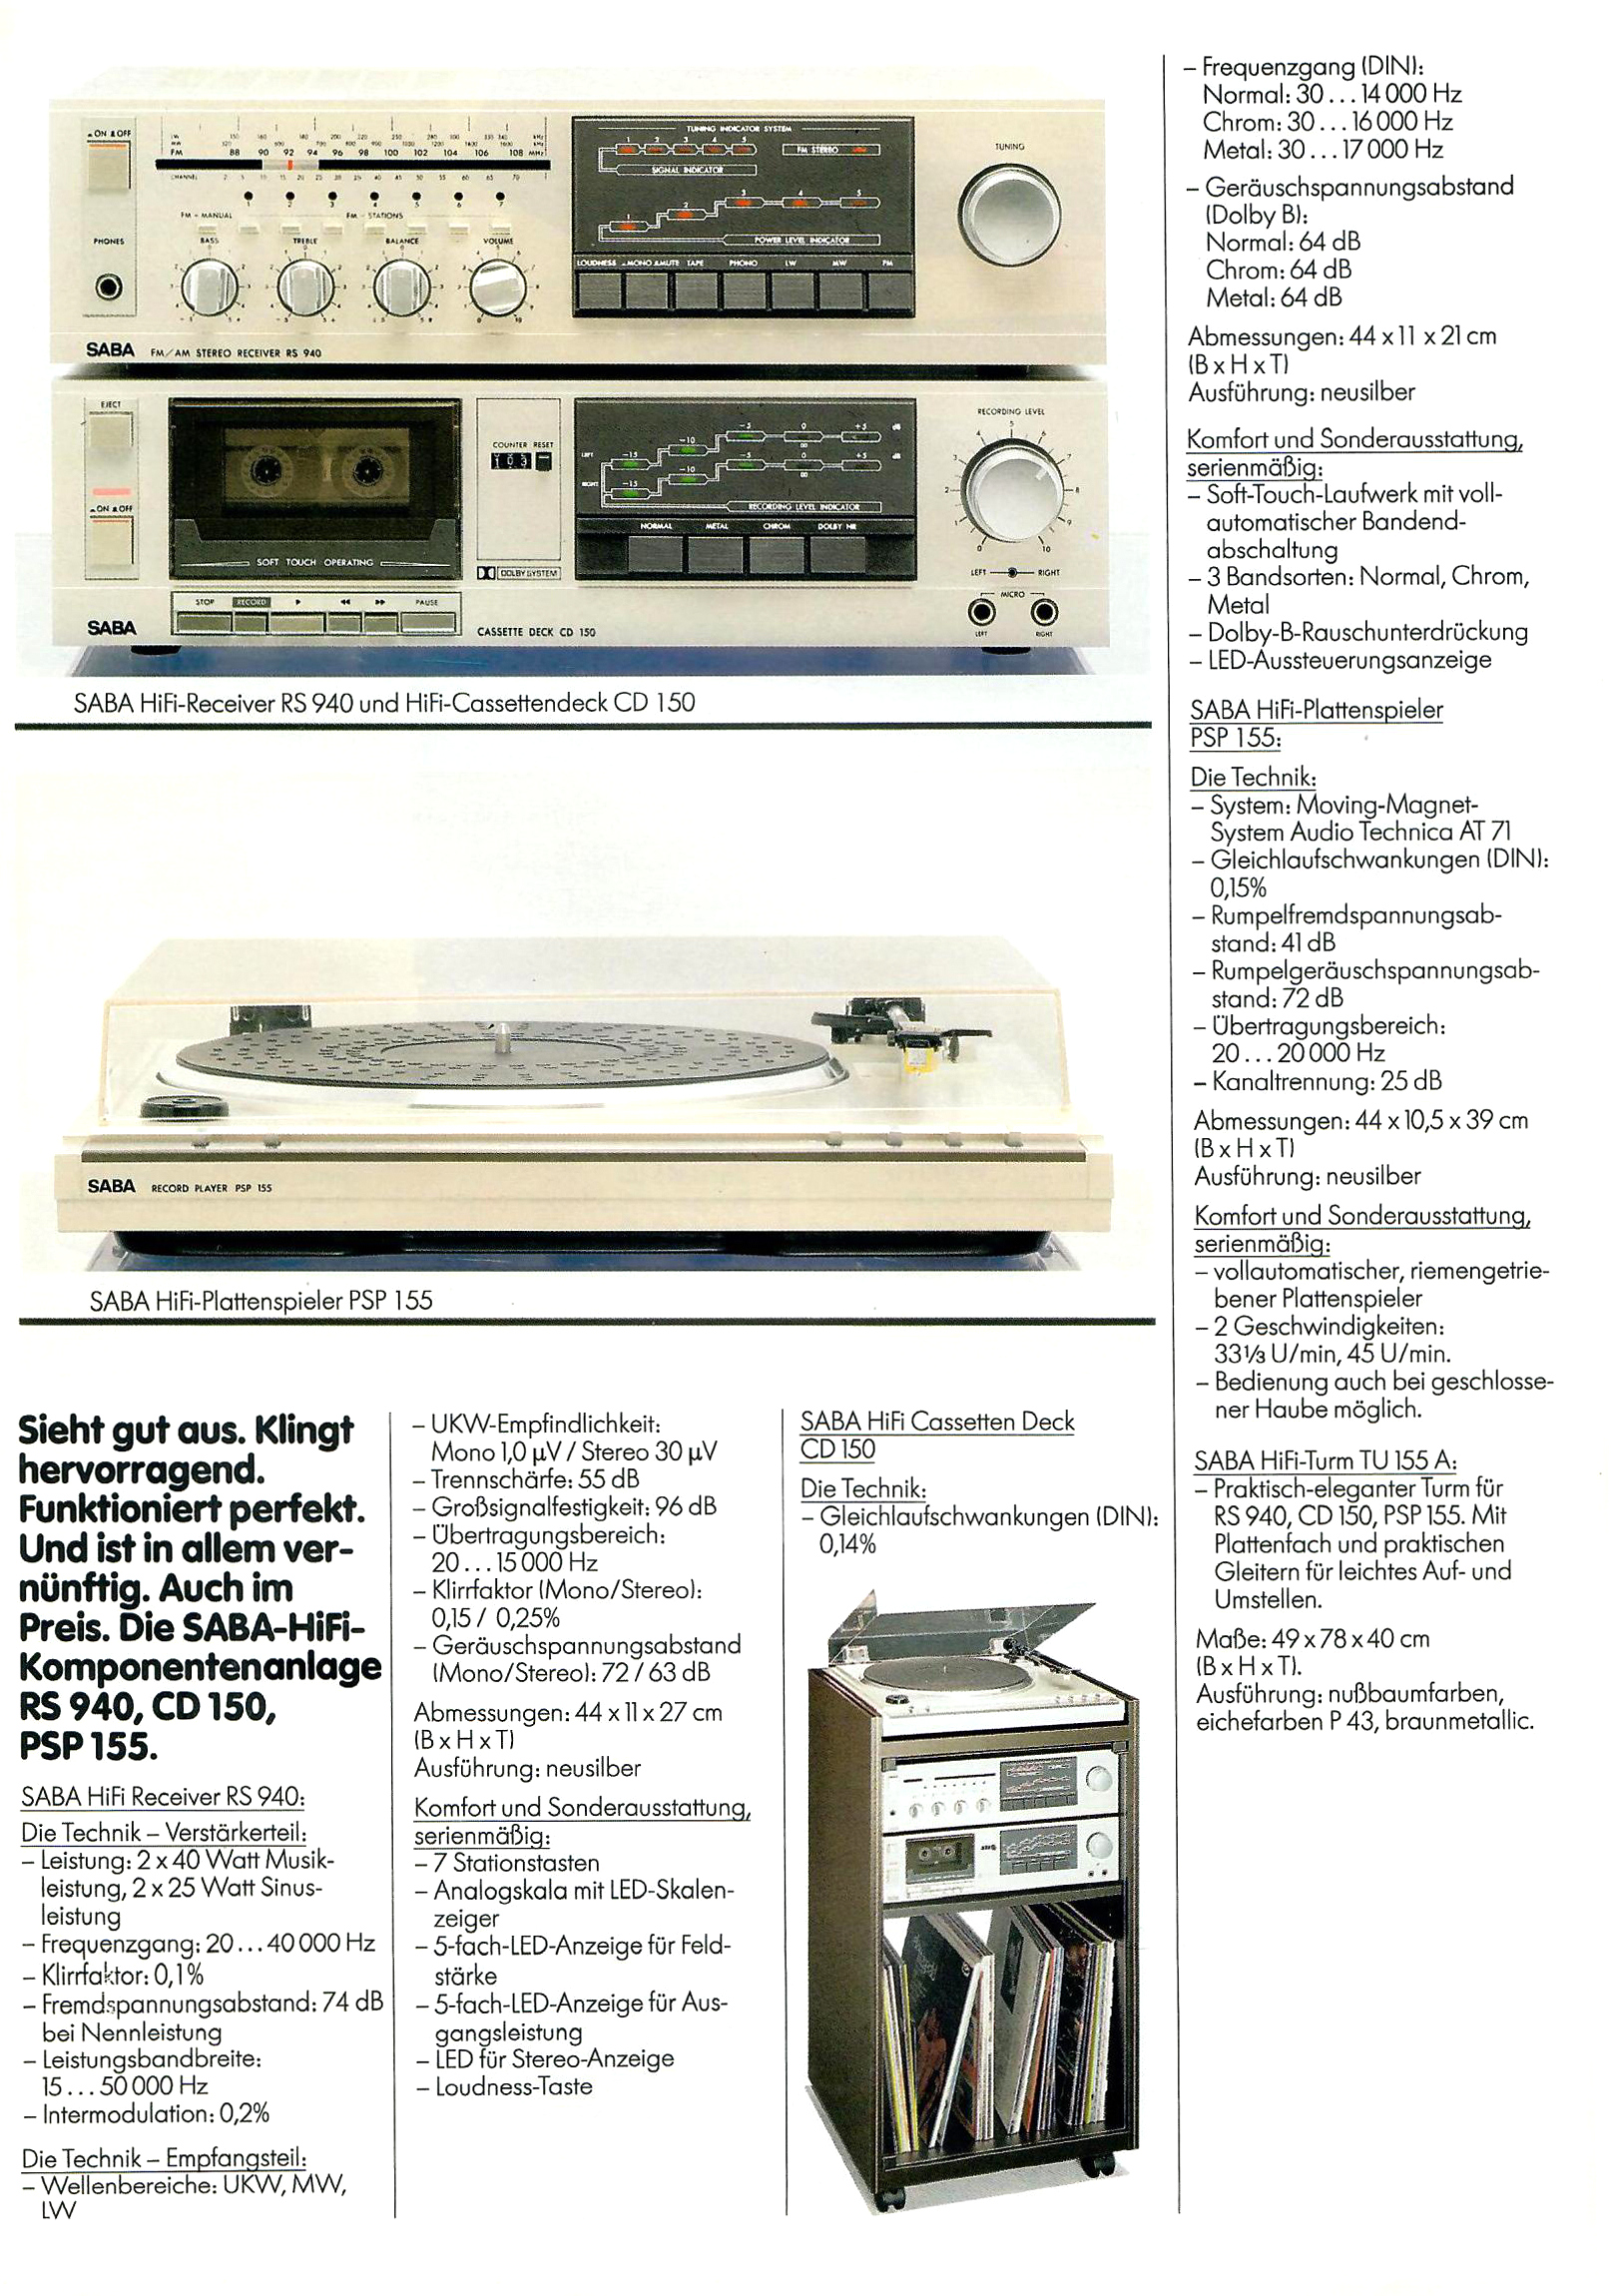 Saba CD-150-PSP-155-RS-940-Prospekt-1983.jpg